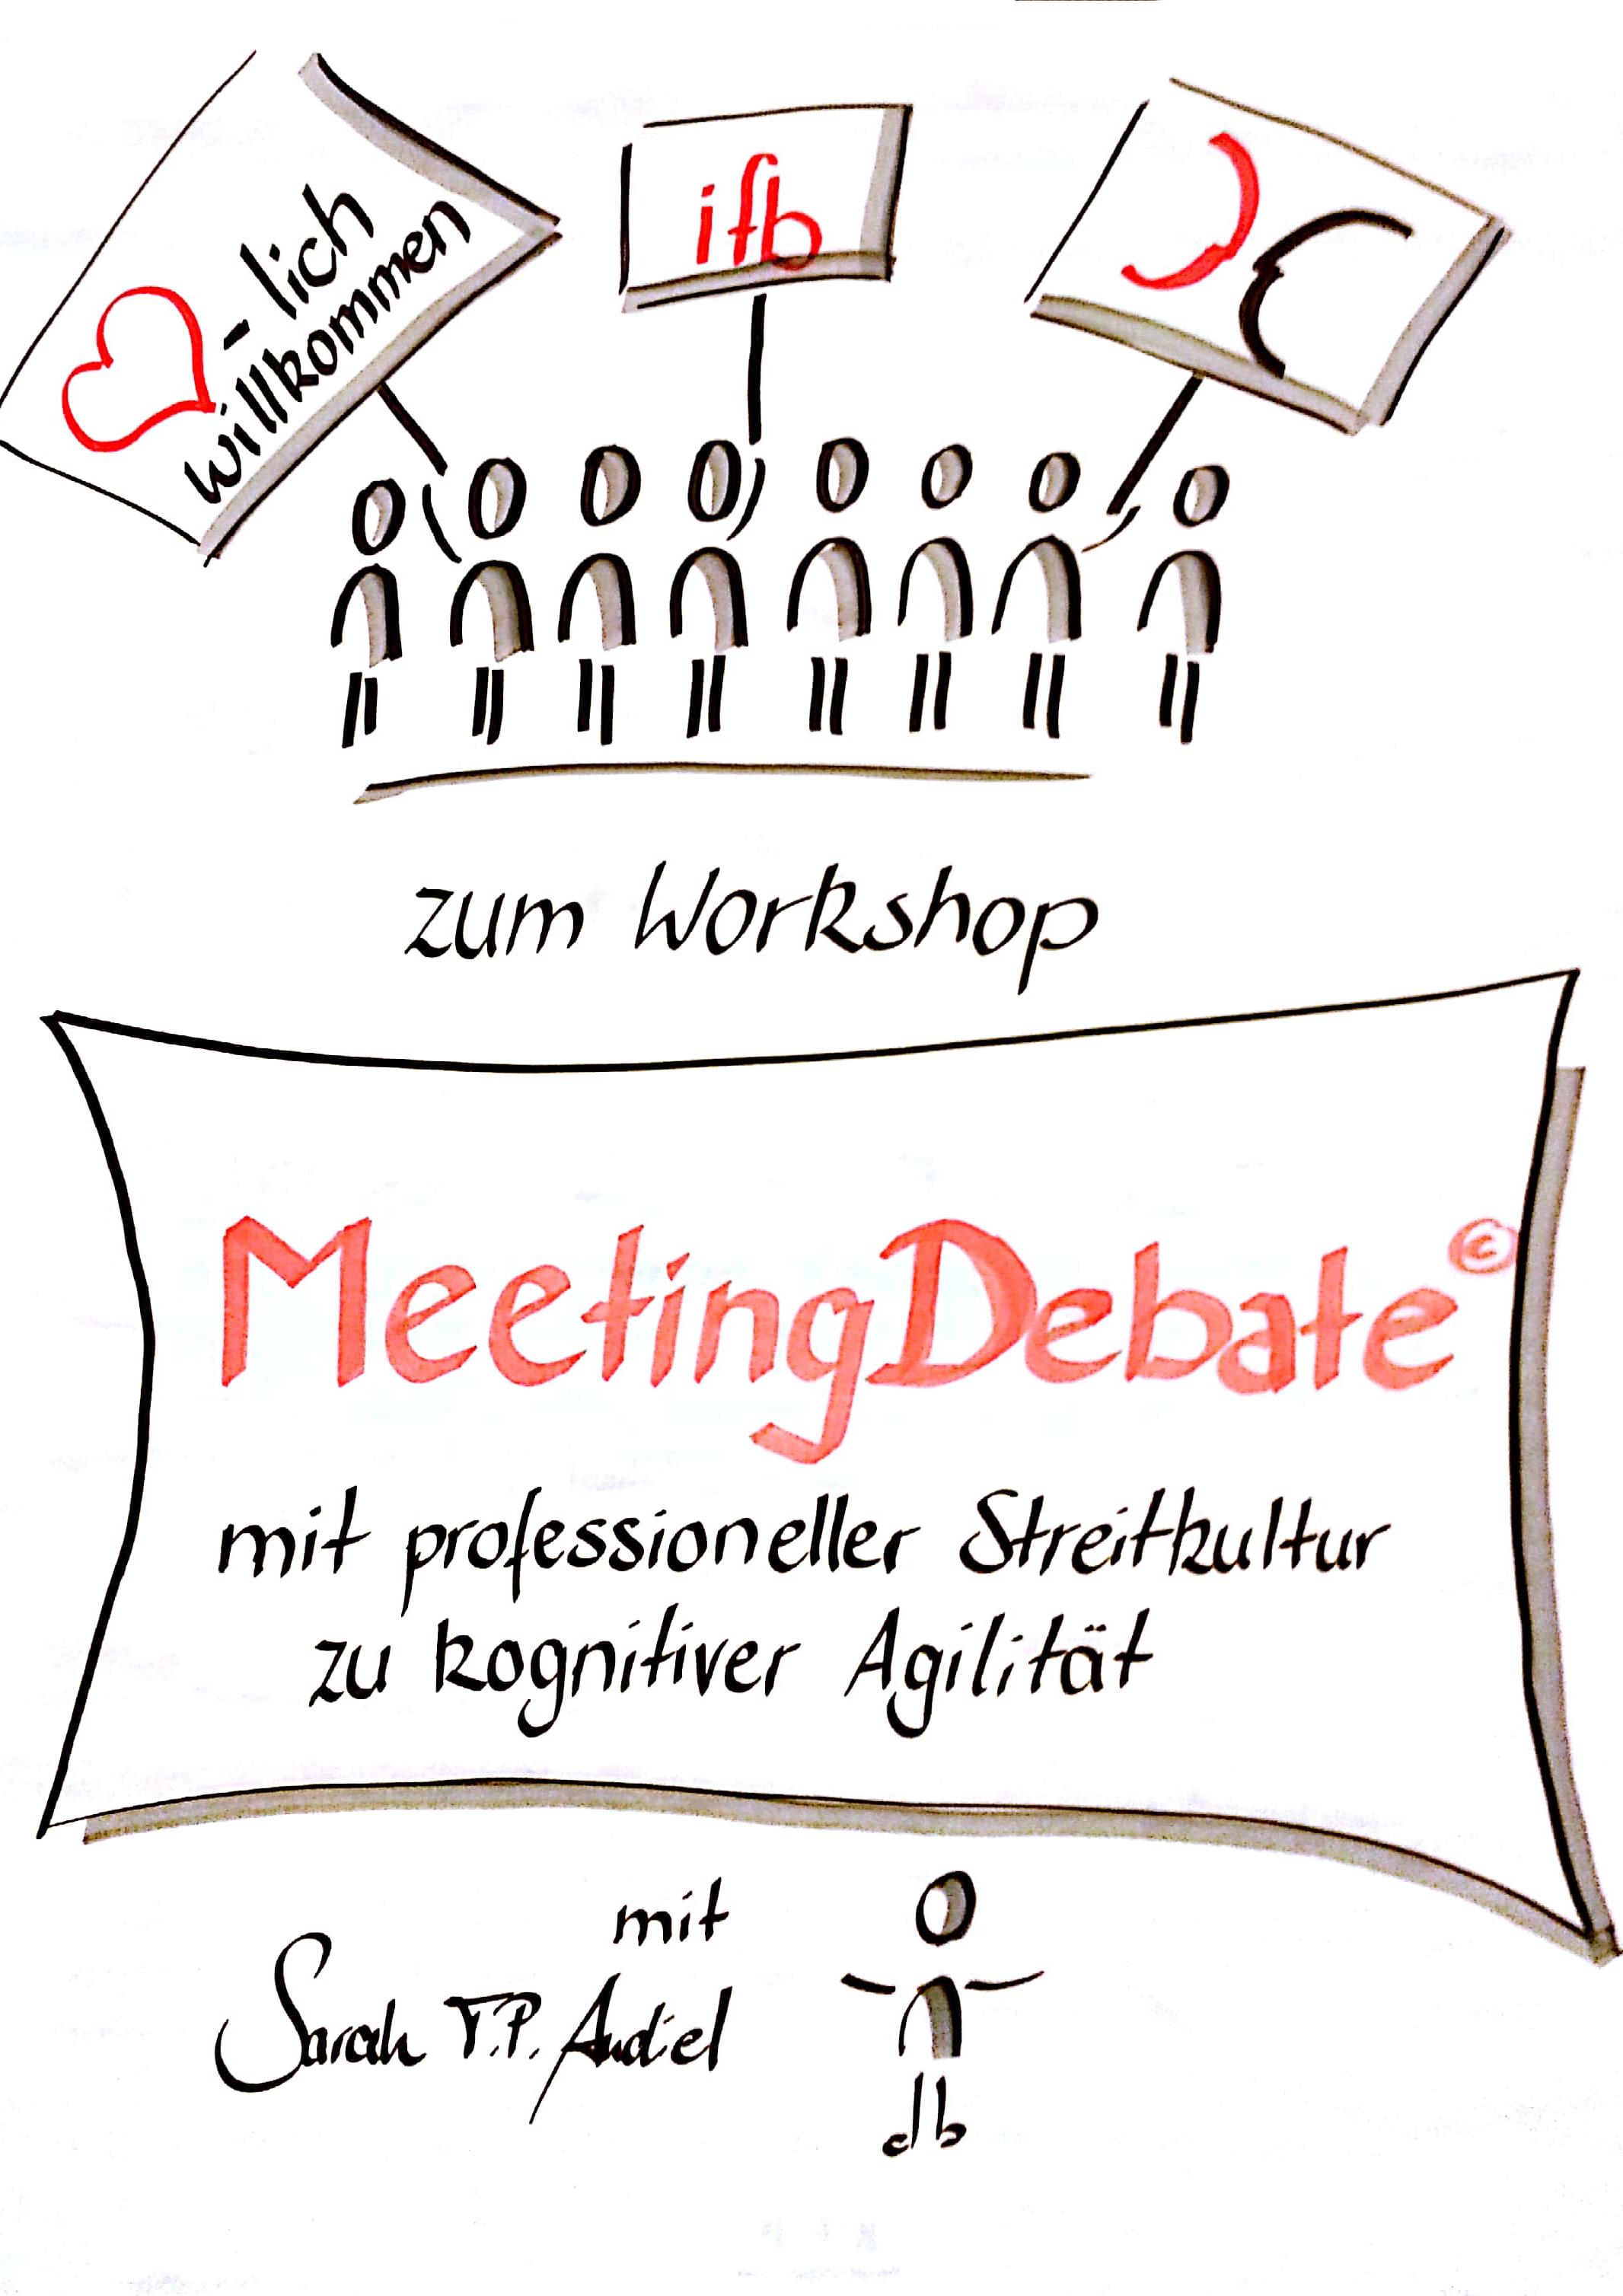 MeetingDebate 1 Willkommen - DebateConsult